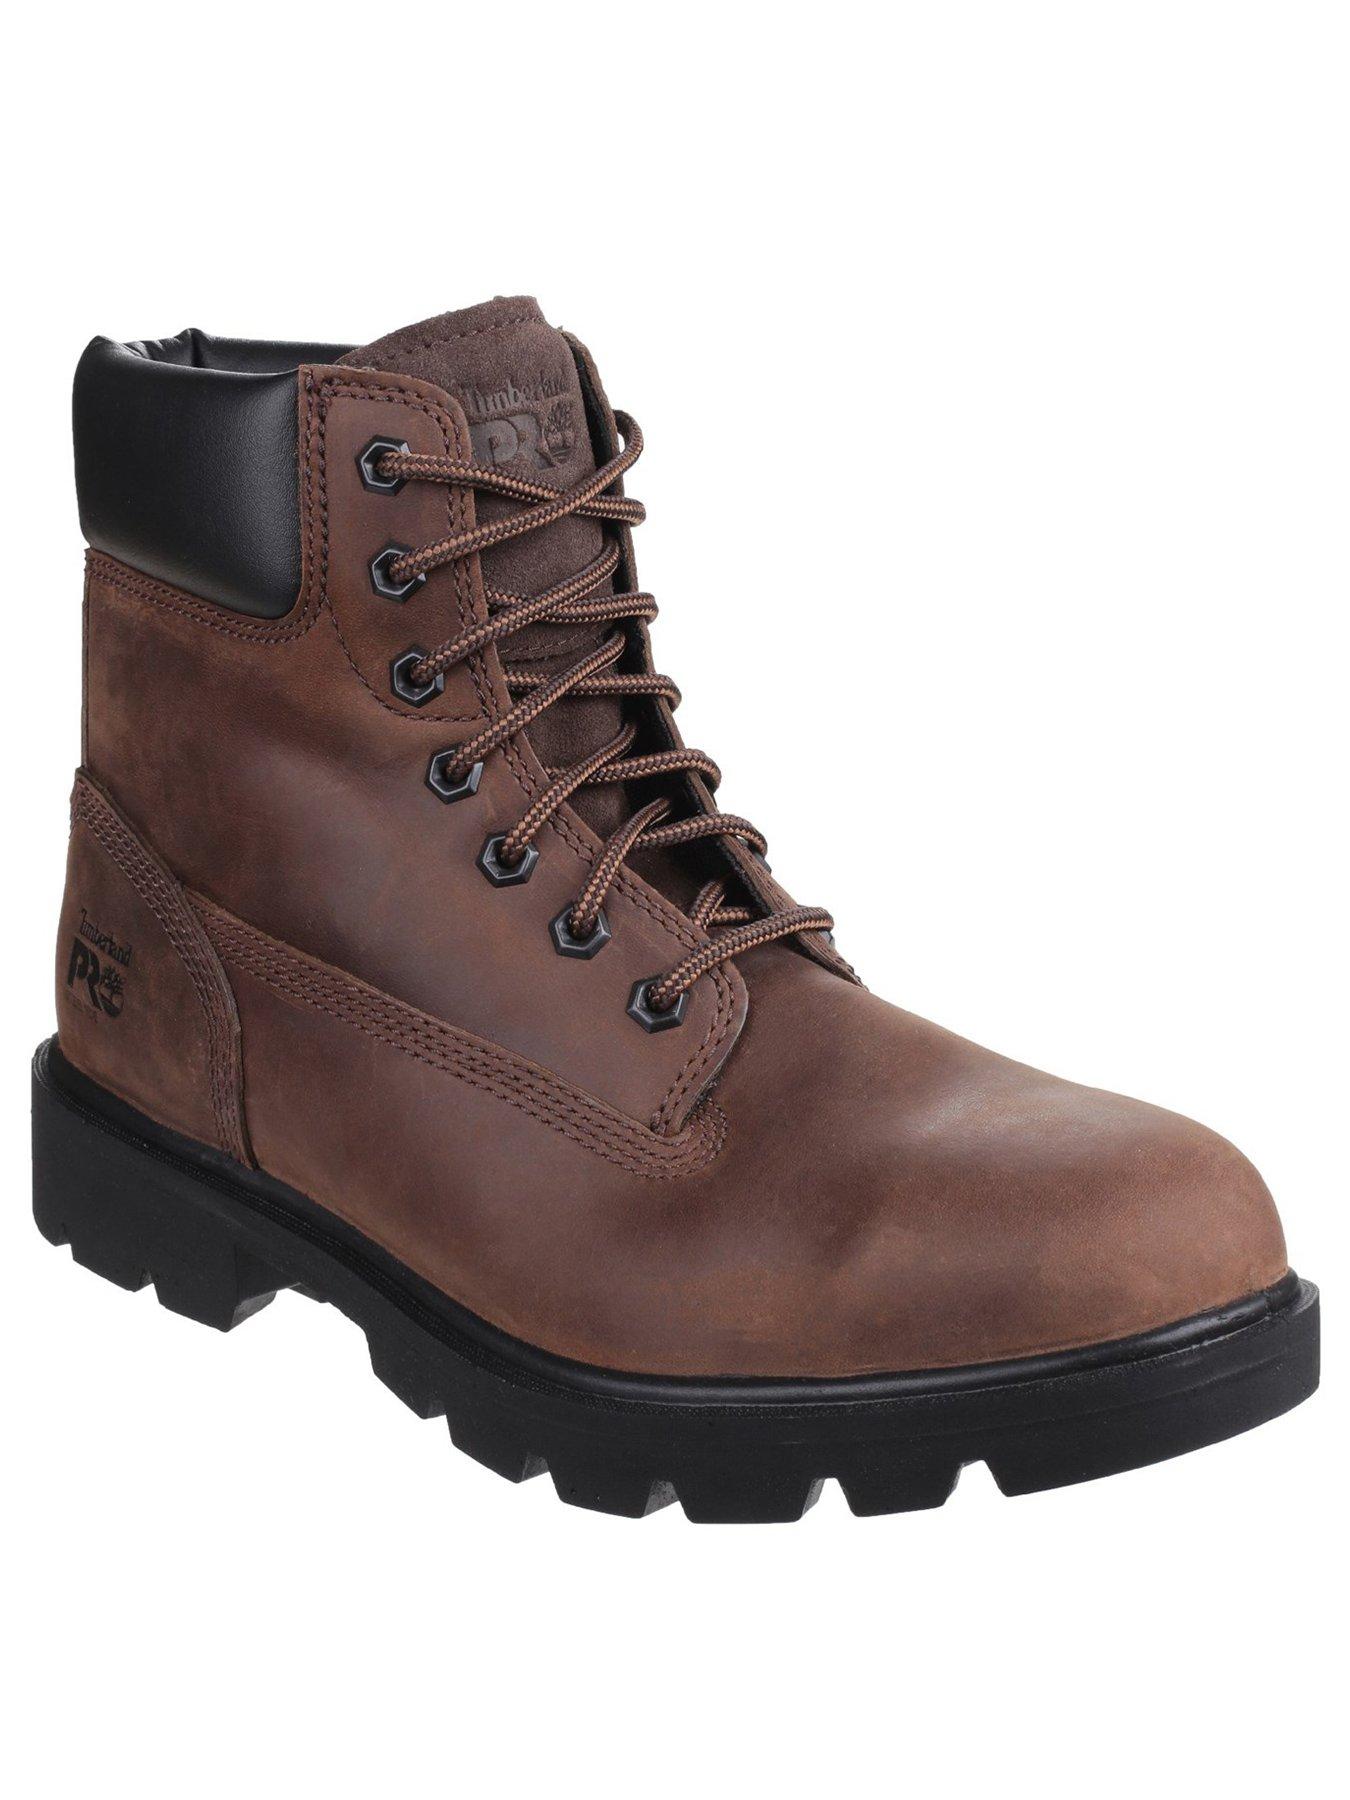 timberland safety boots uk